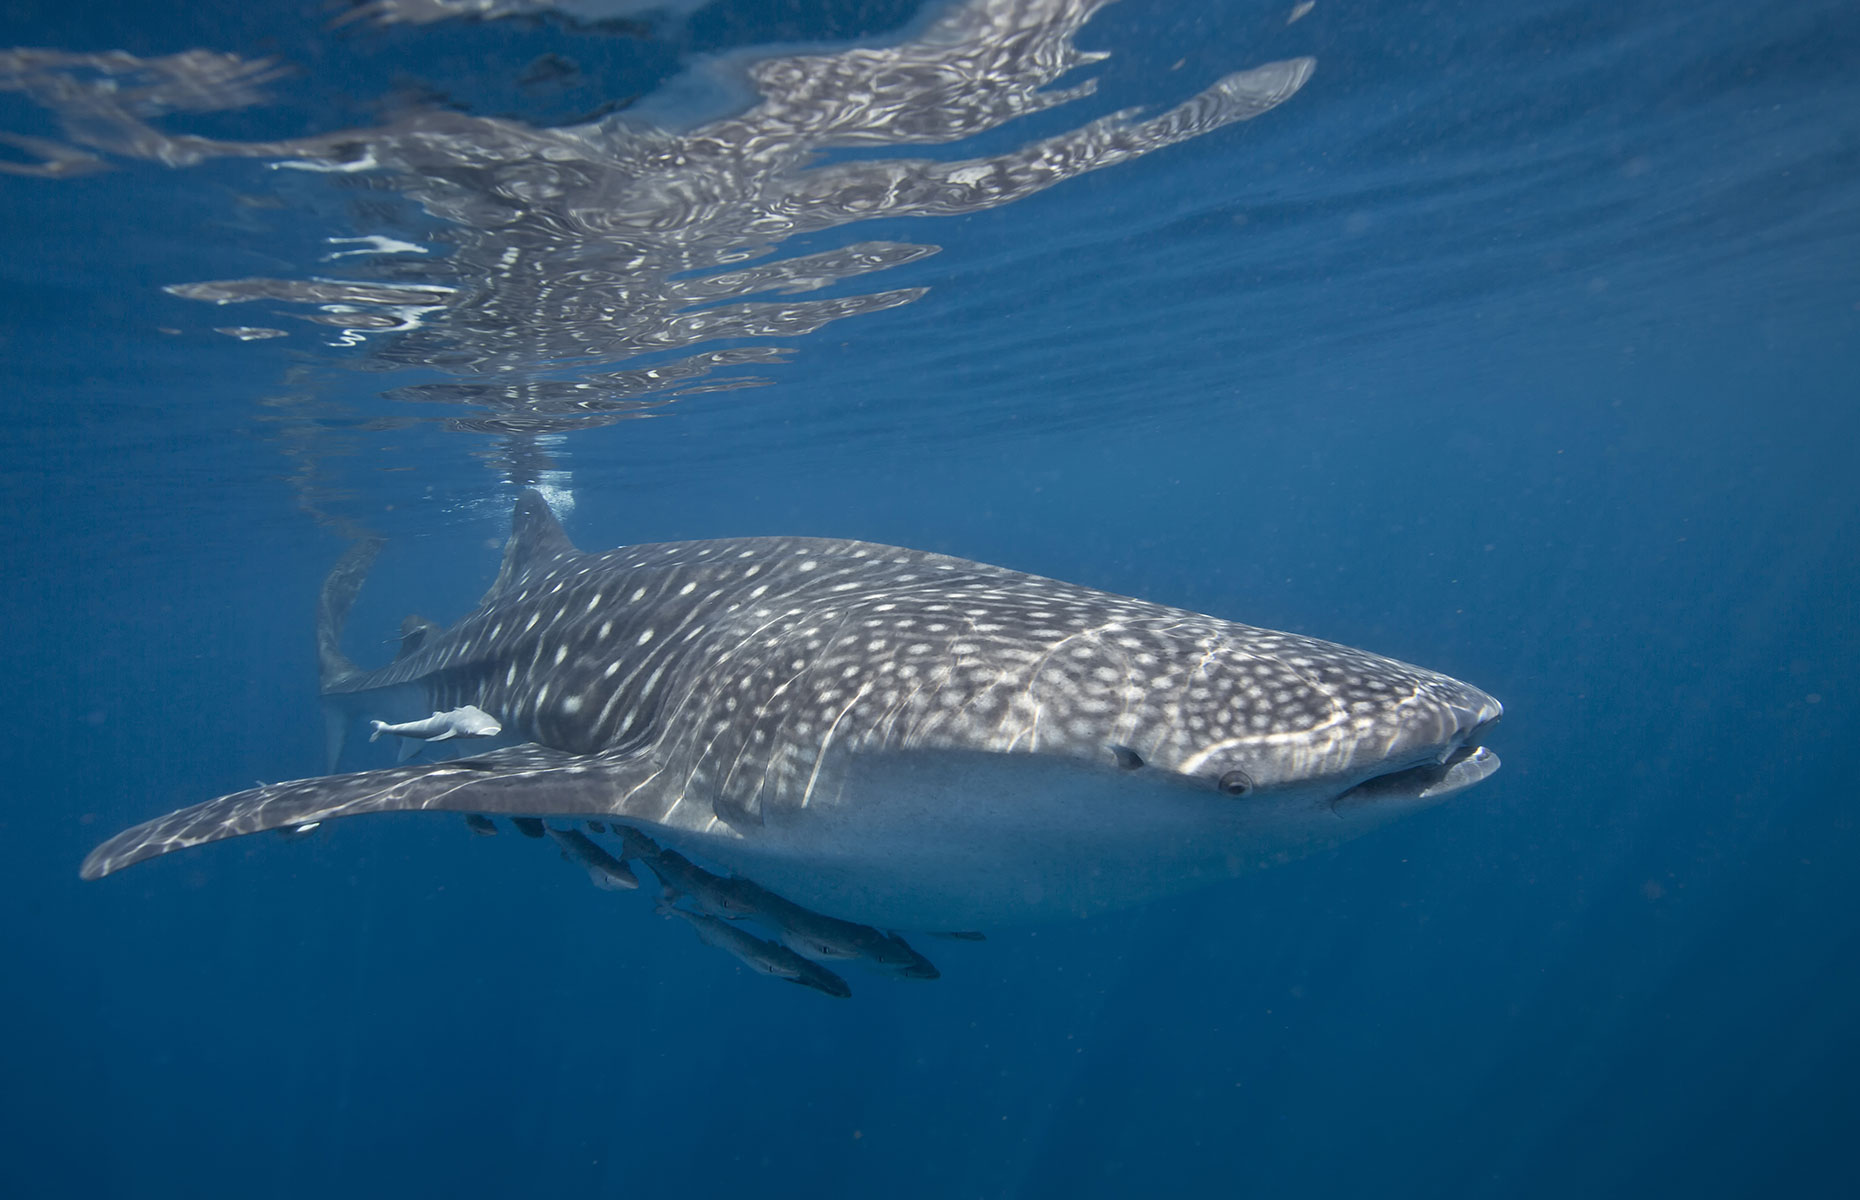 Whale shark spotted in the Al Diminiyat Islands, Oman (Image: Shutterstock/SeraphP)